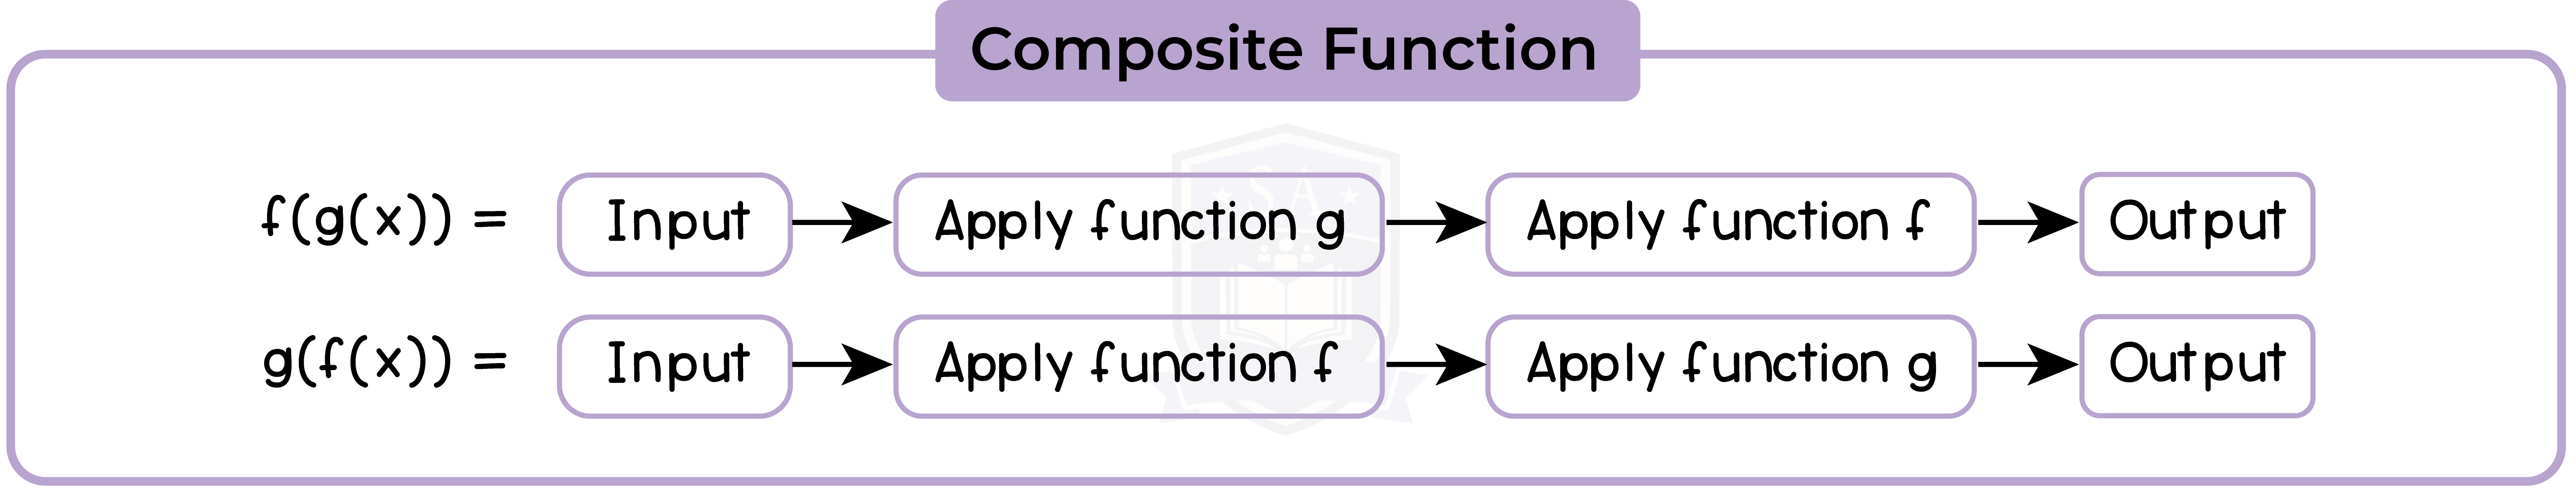 edexcel_igcse_mathematics a_topic 21_functional notation_002_Composite Function